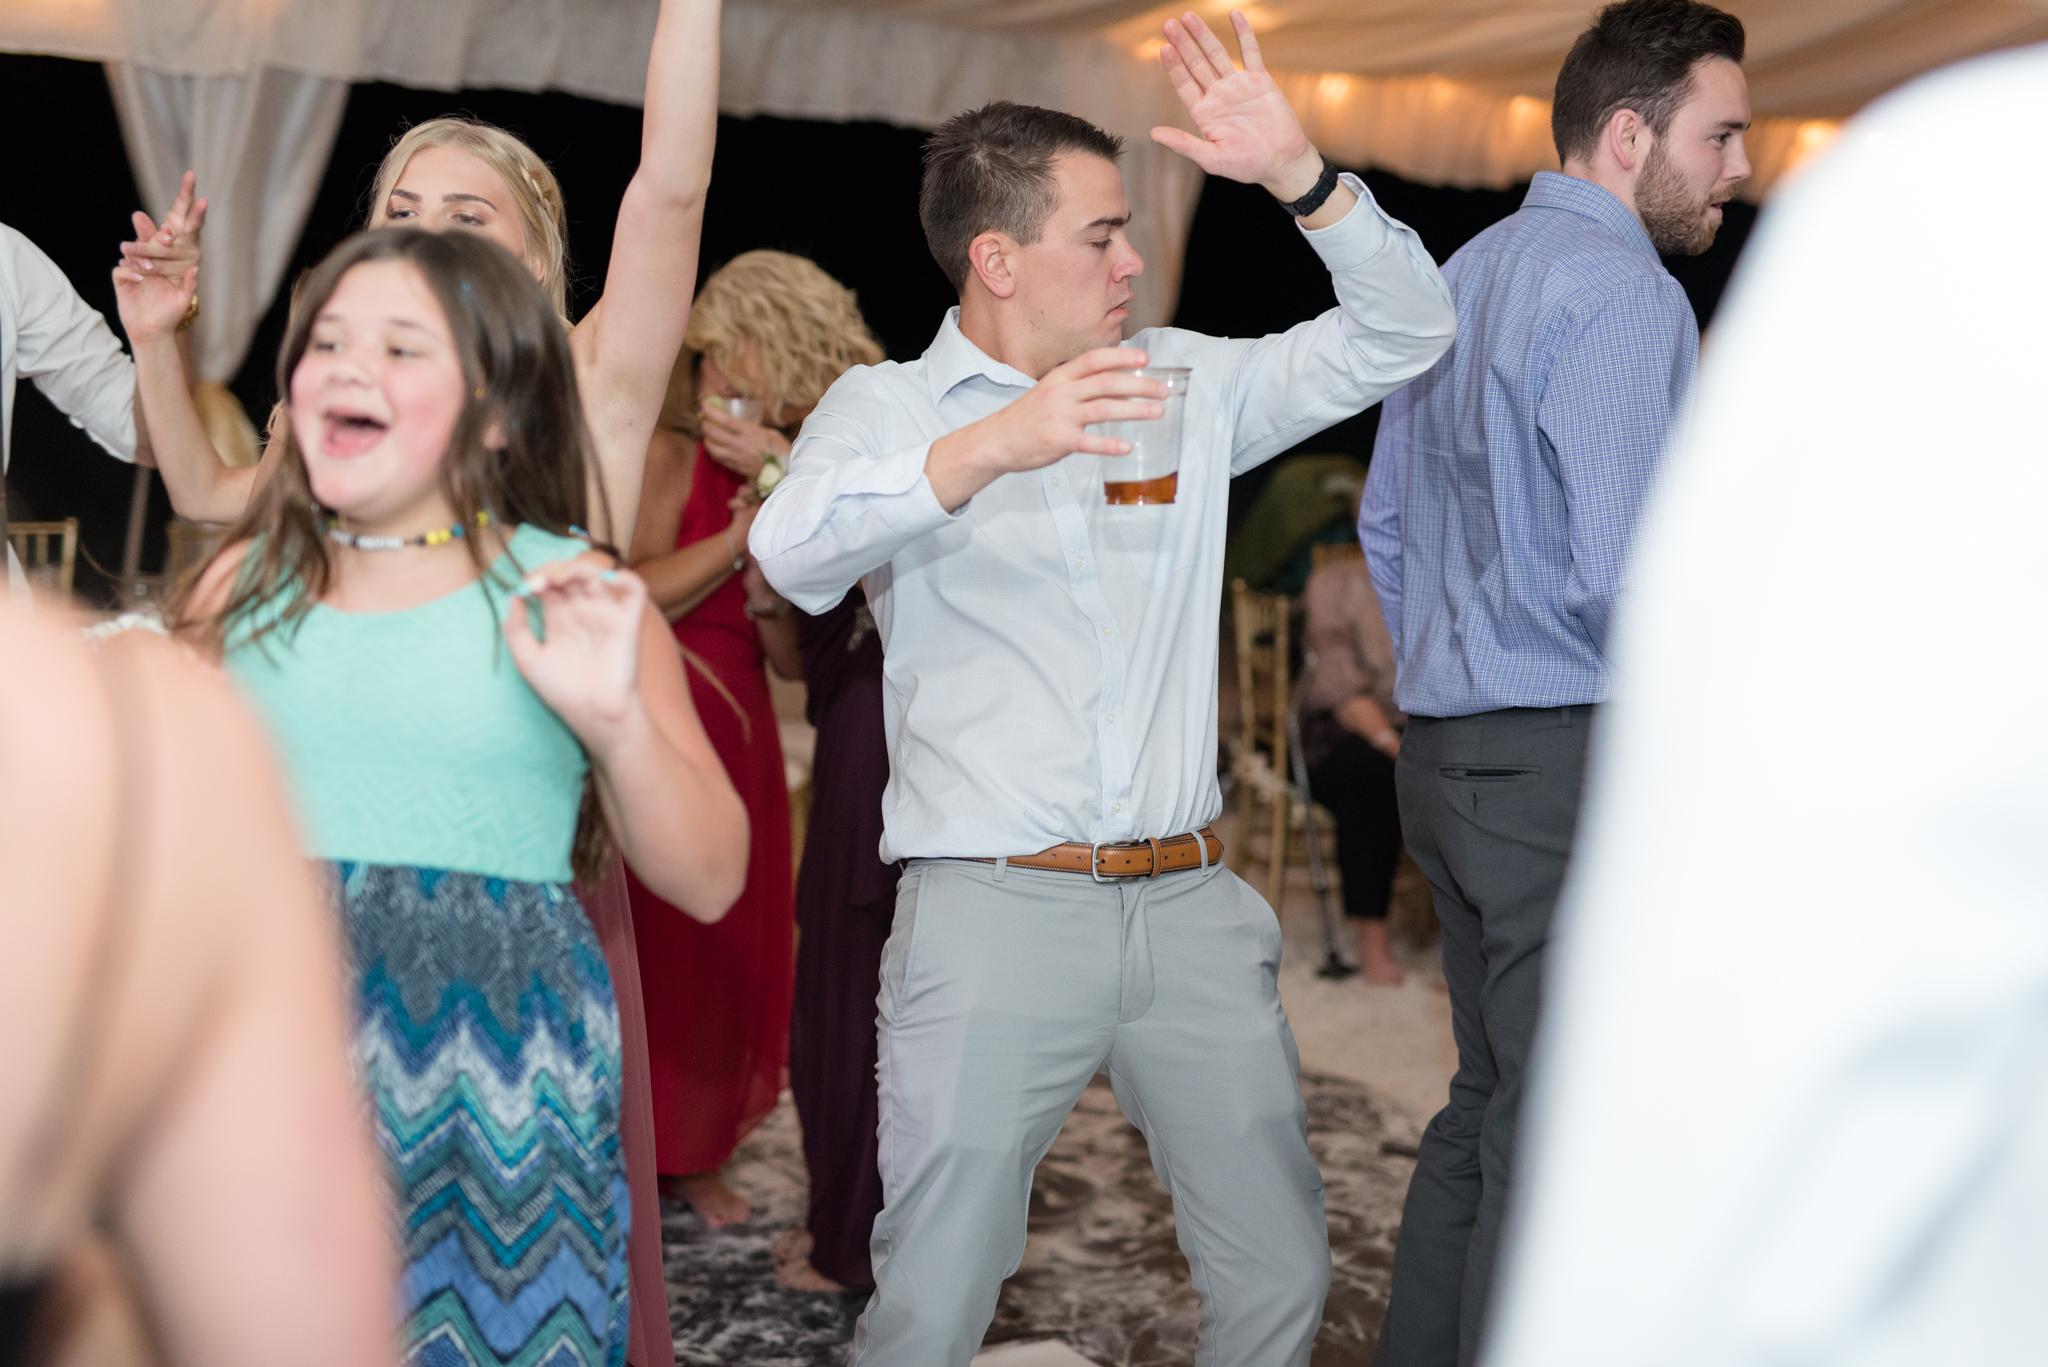 Guest dances at wedding reception.